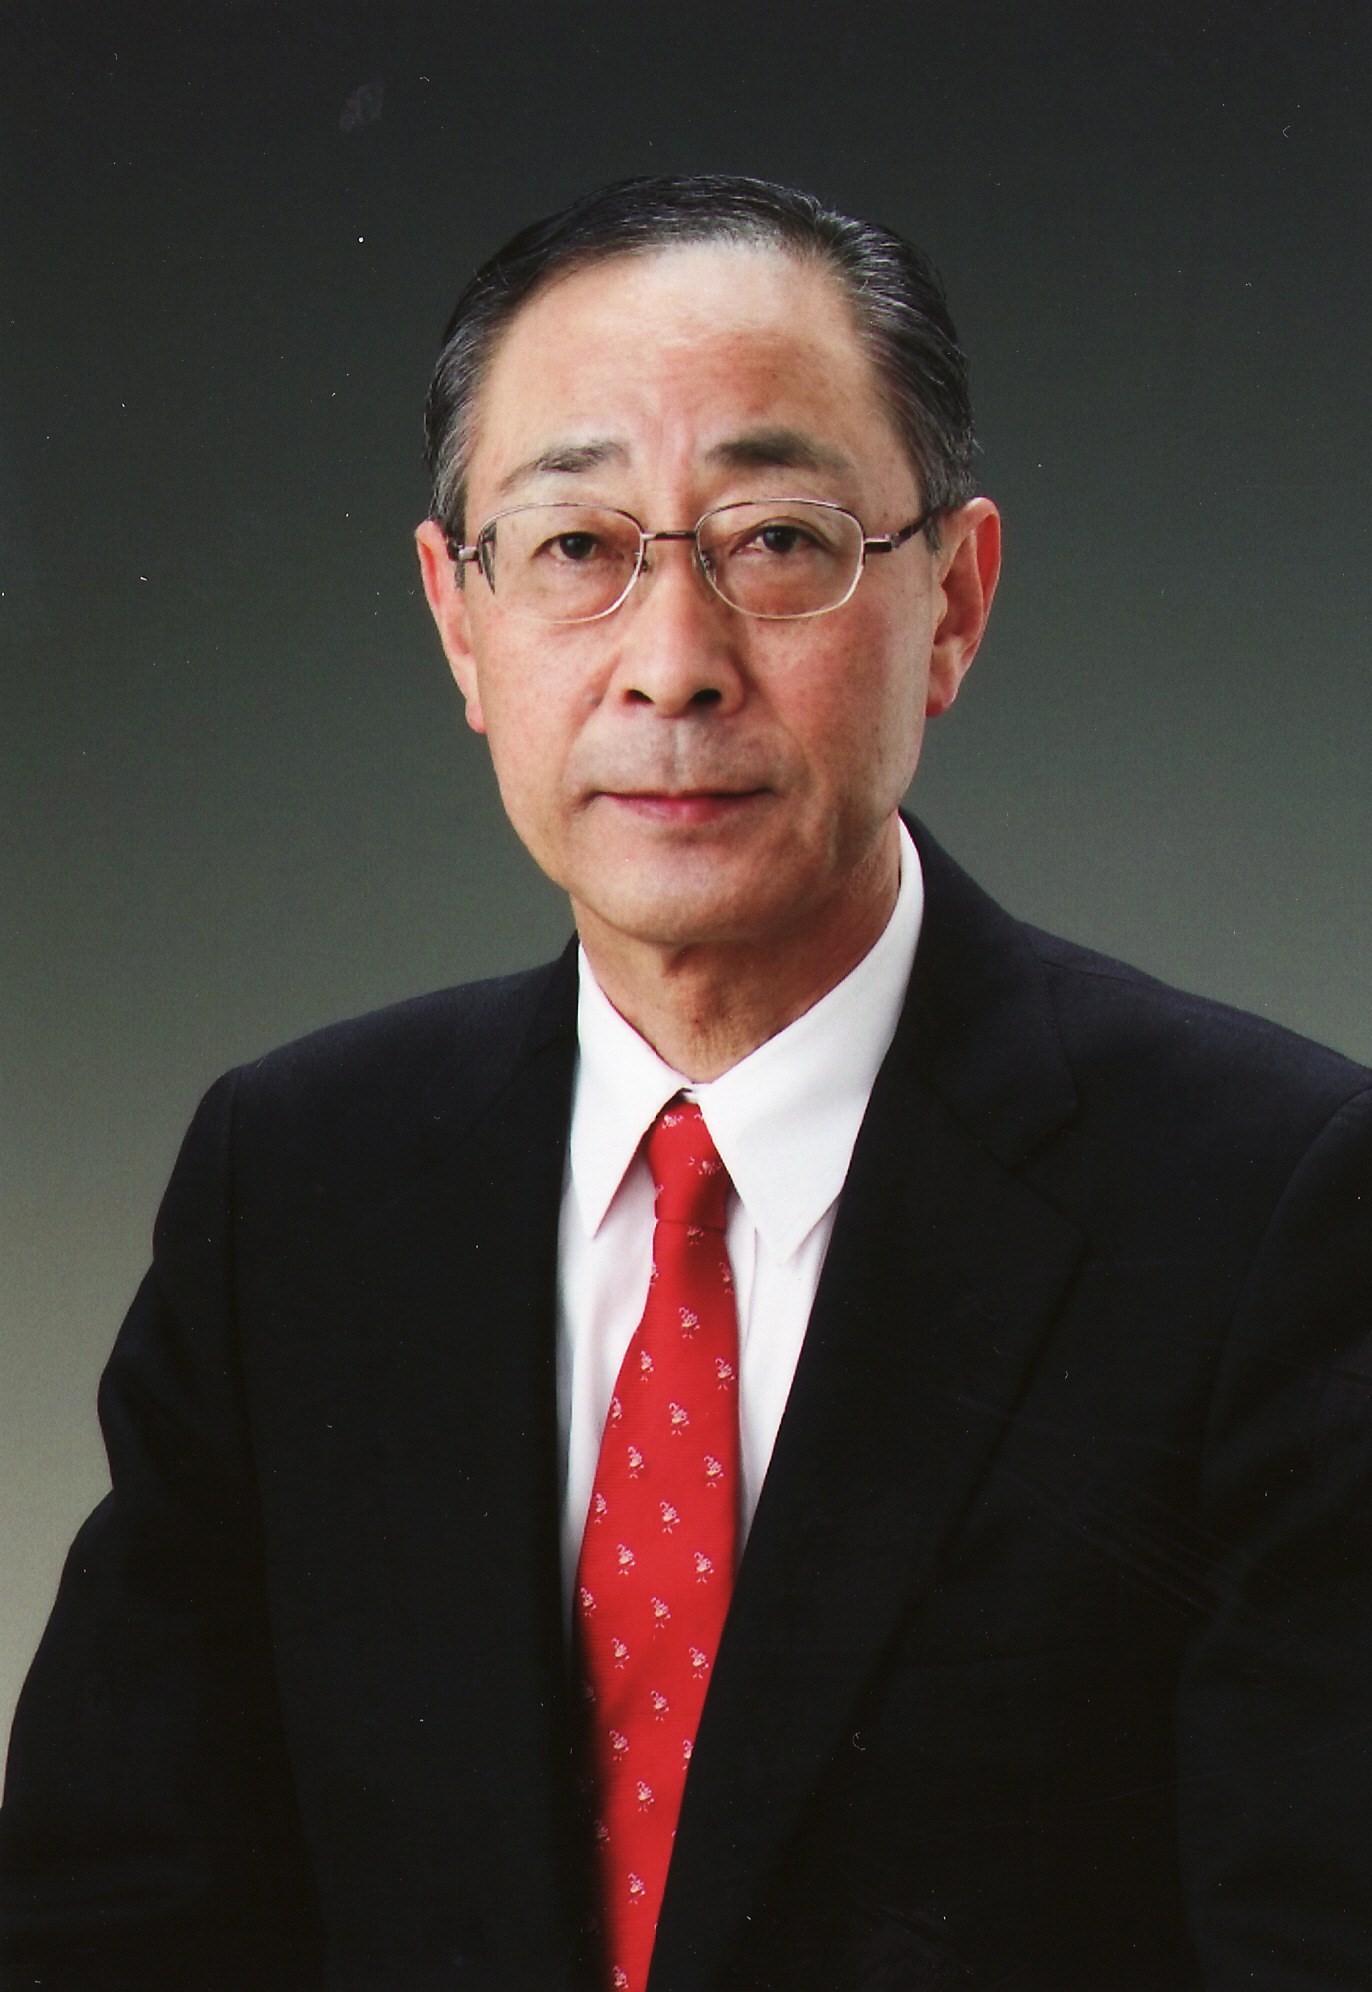 福島弘芳市長の顔写真